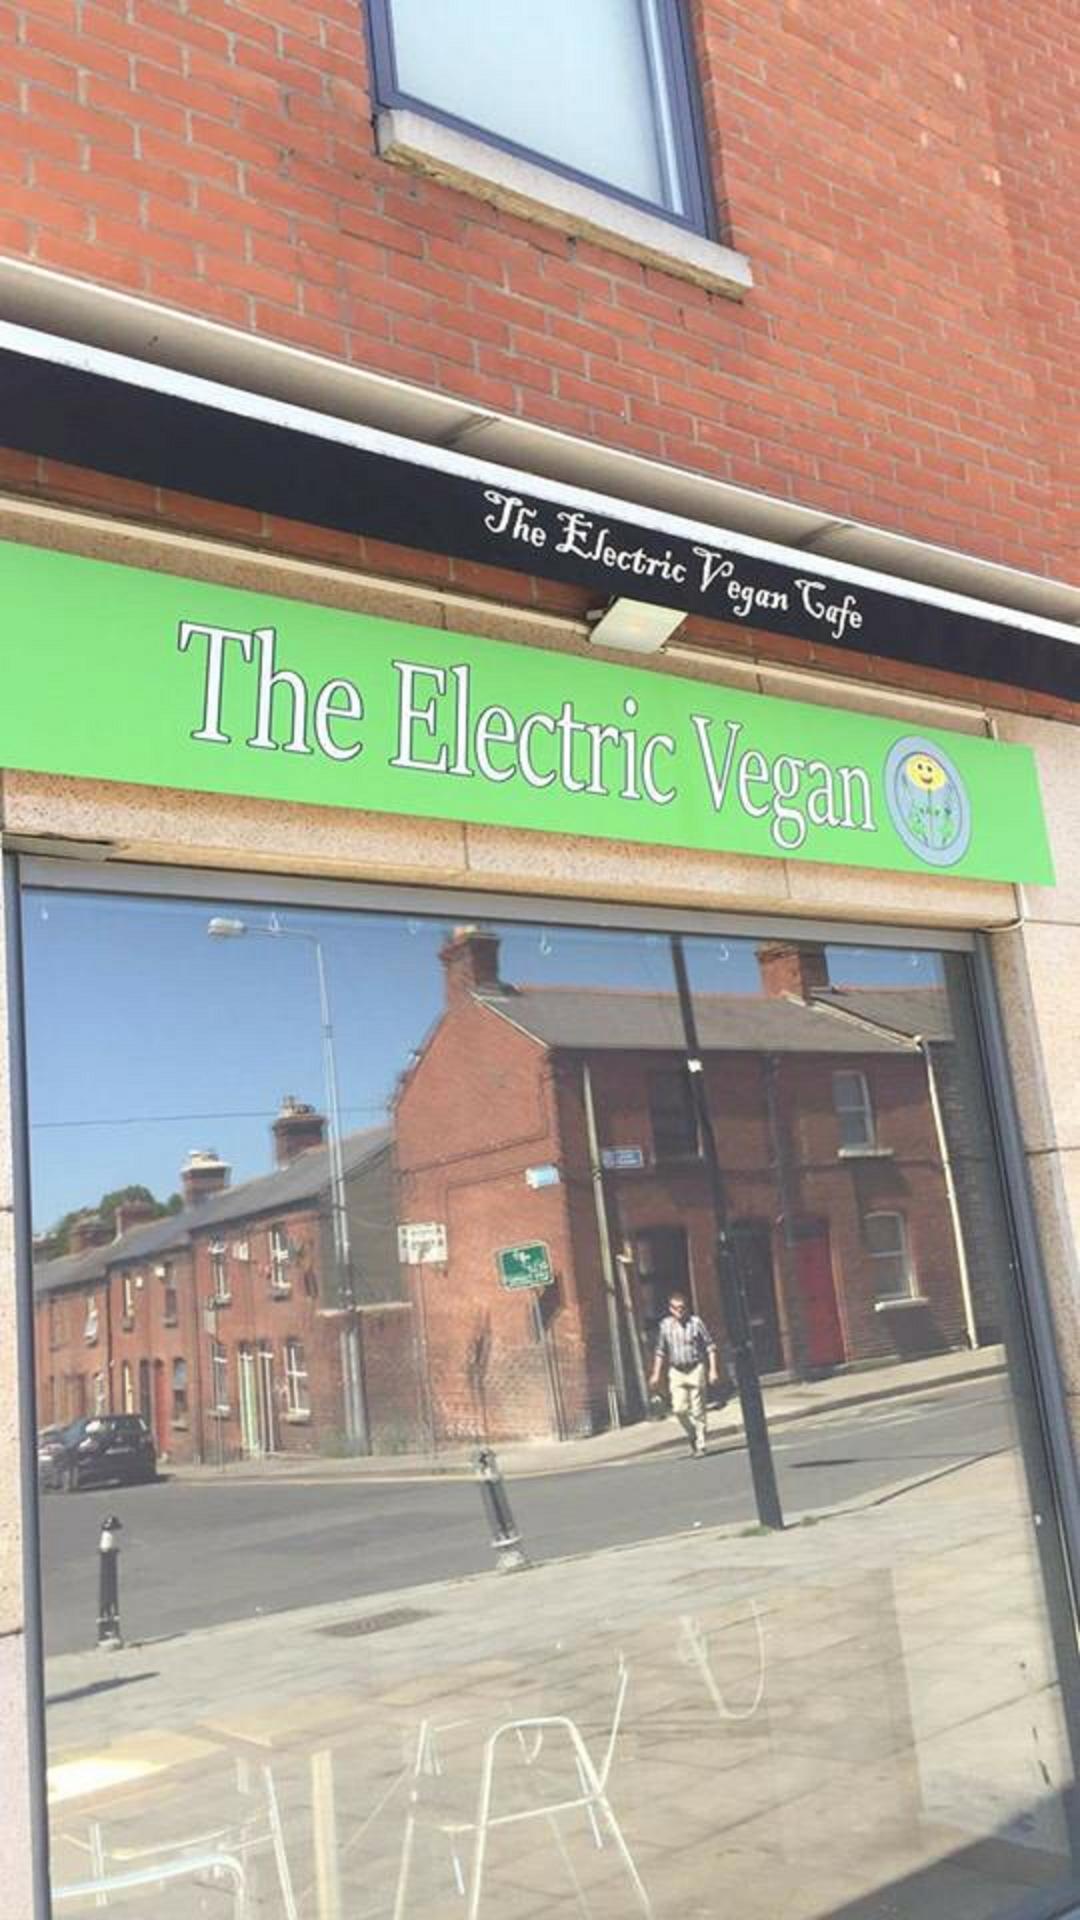 The Electric Vegan